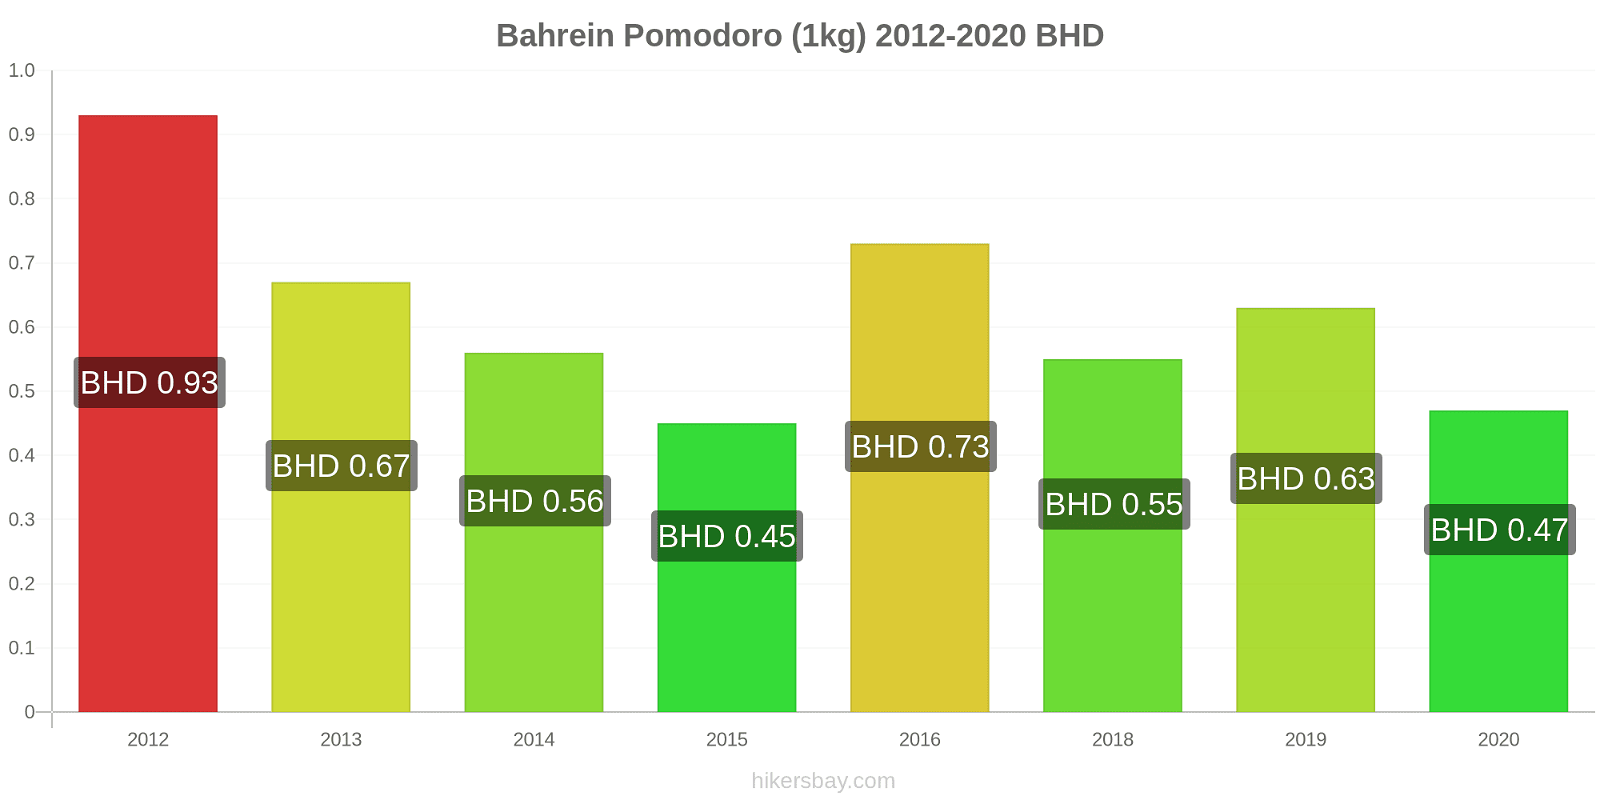 Bahrein variazioni di prezzo Pomodoro (1kg) hikersbay.com